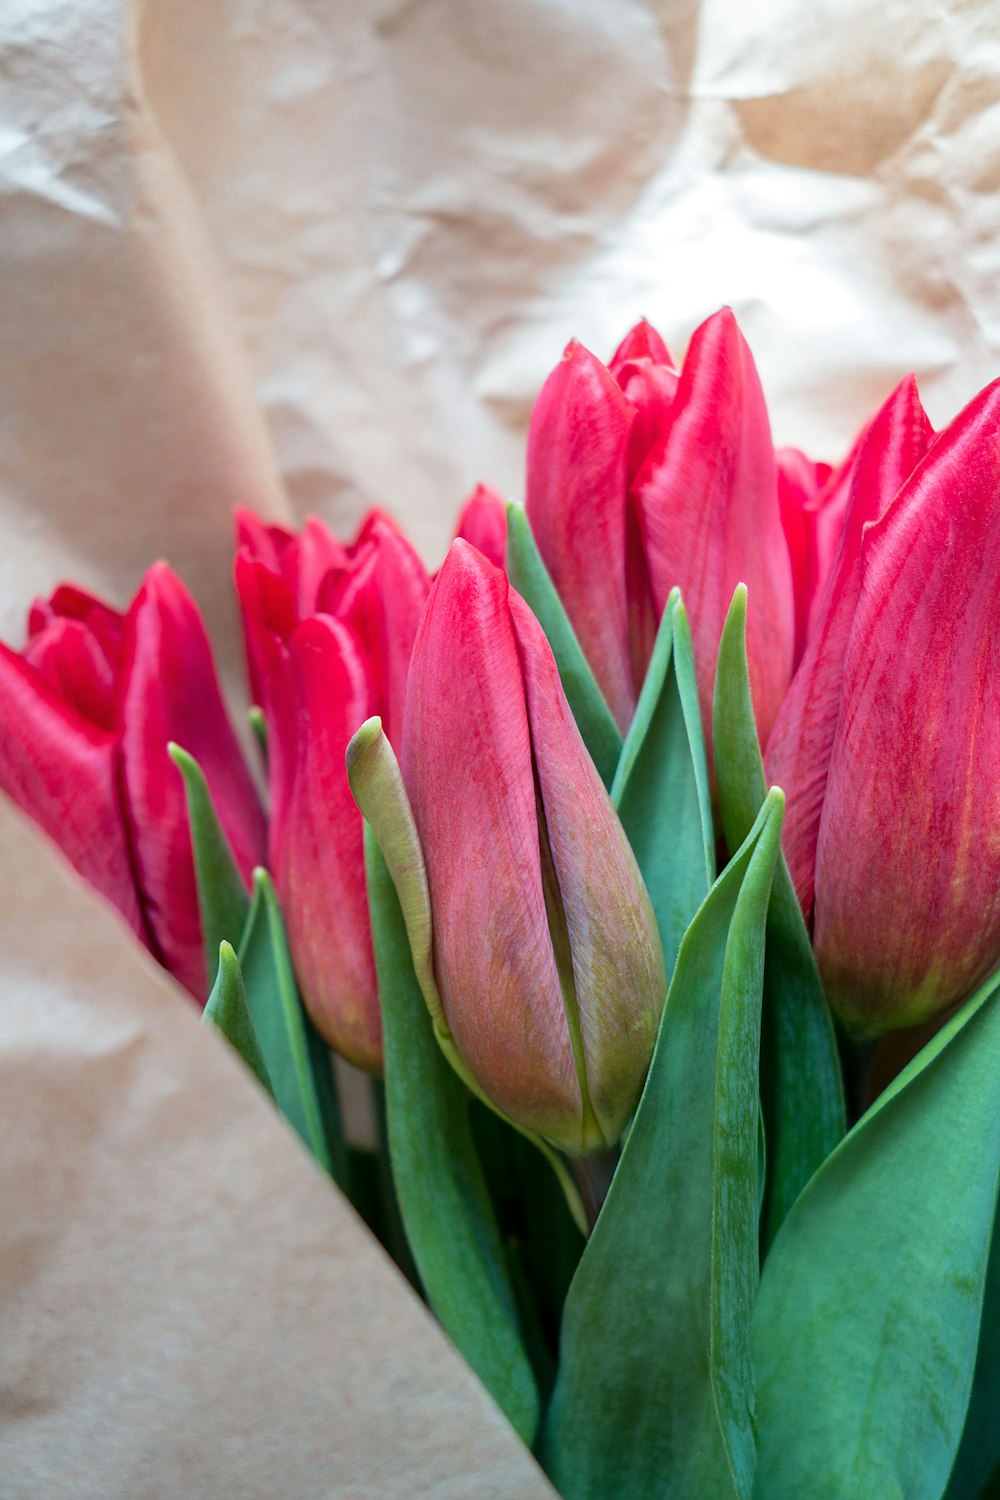 pink tulip in bloom during daytime